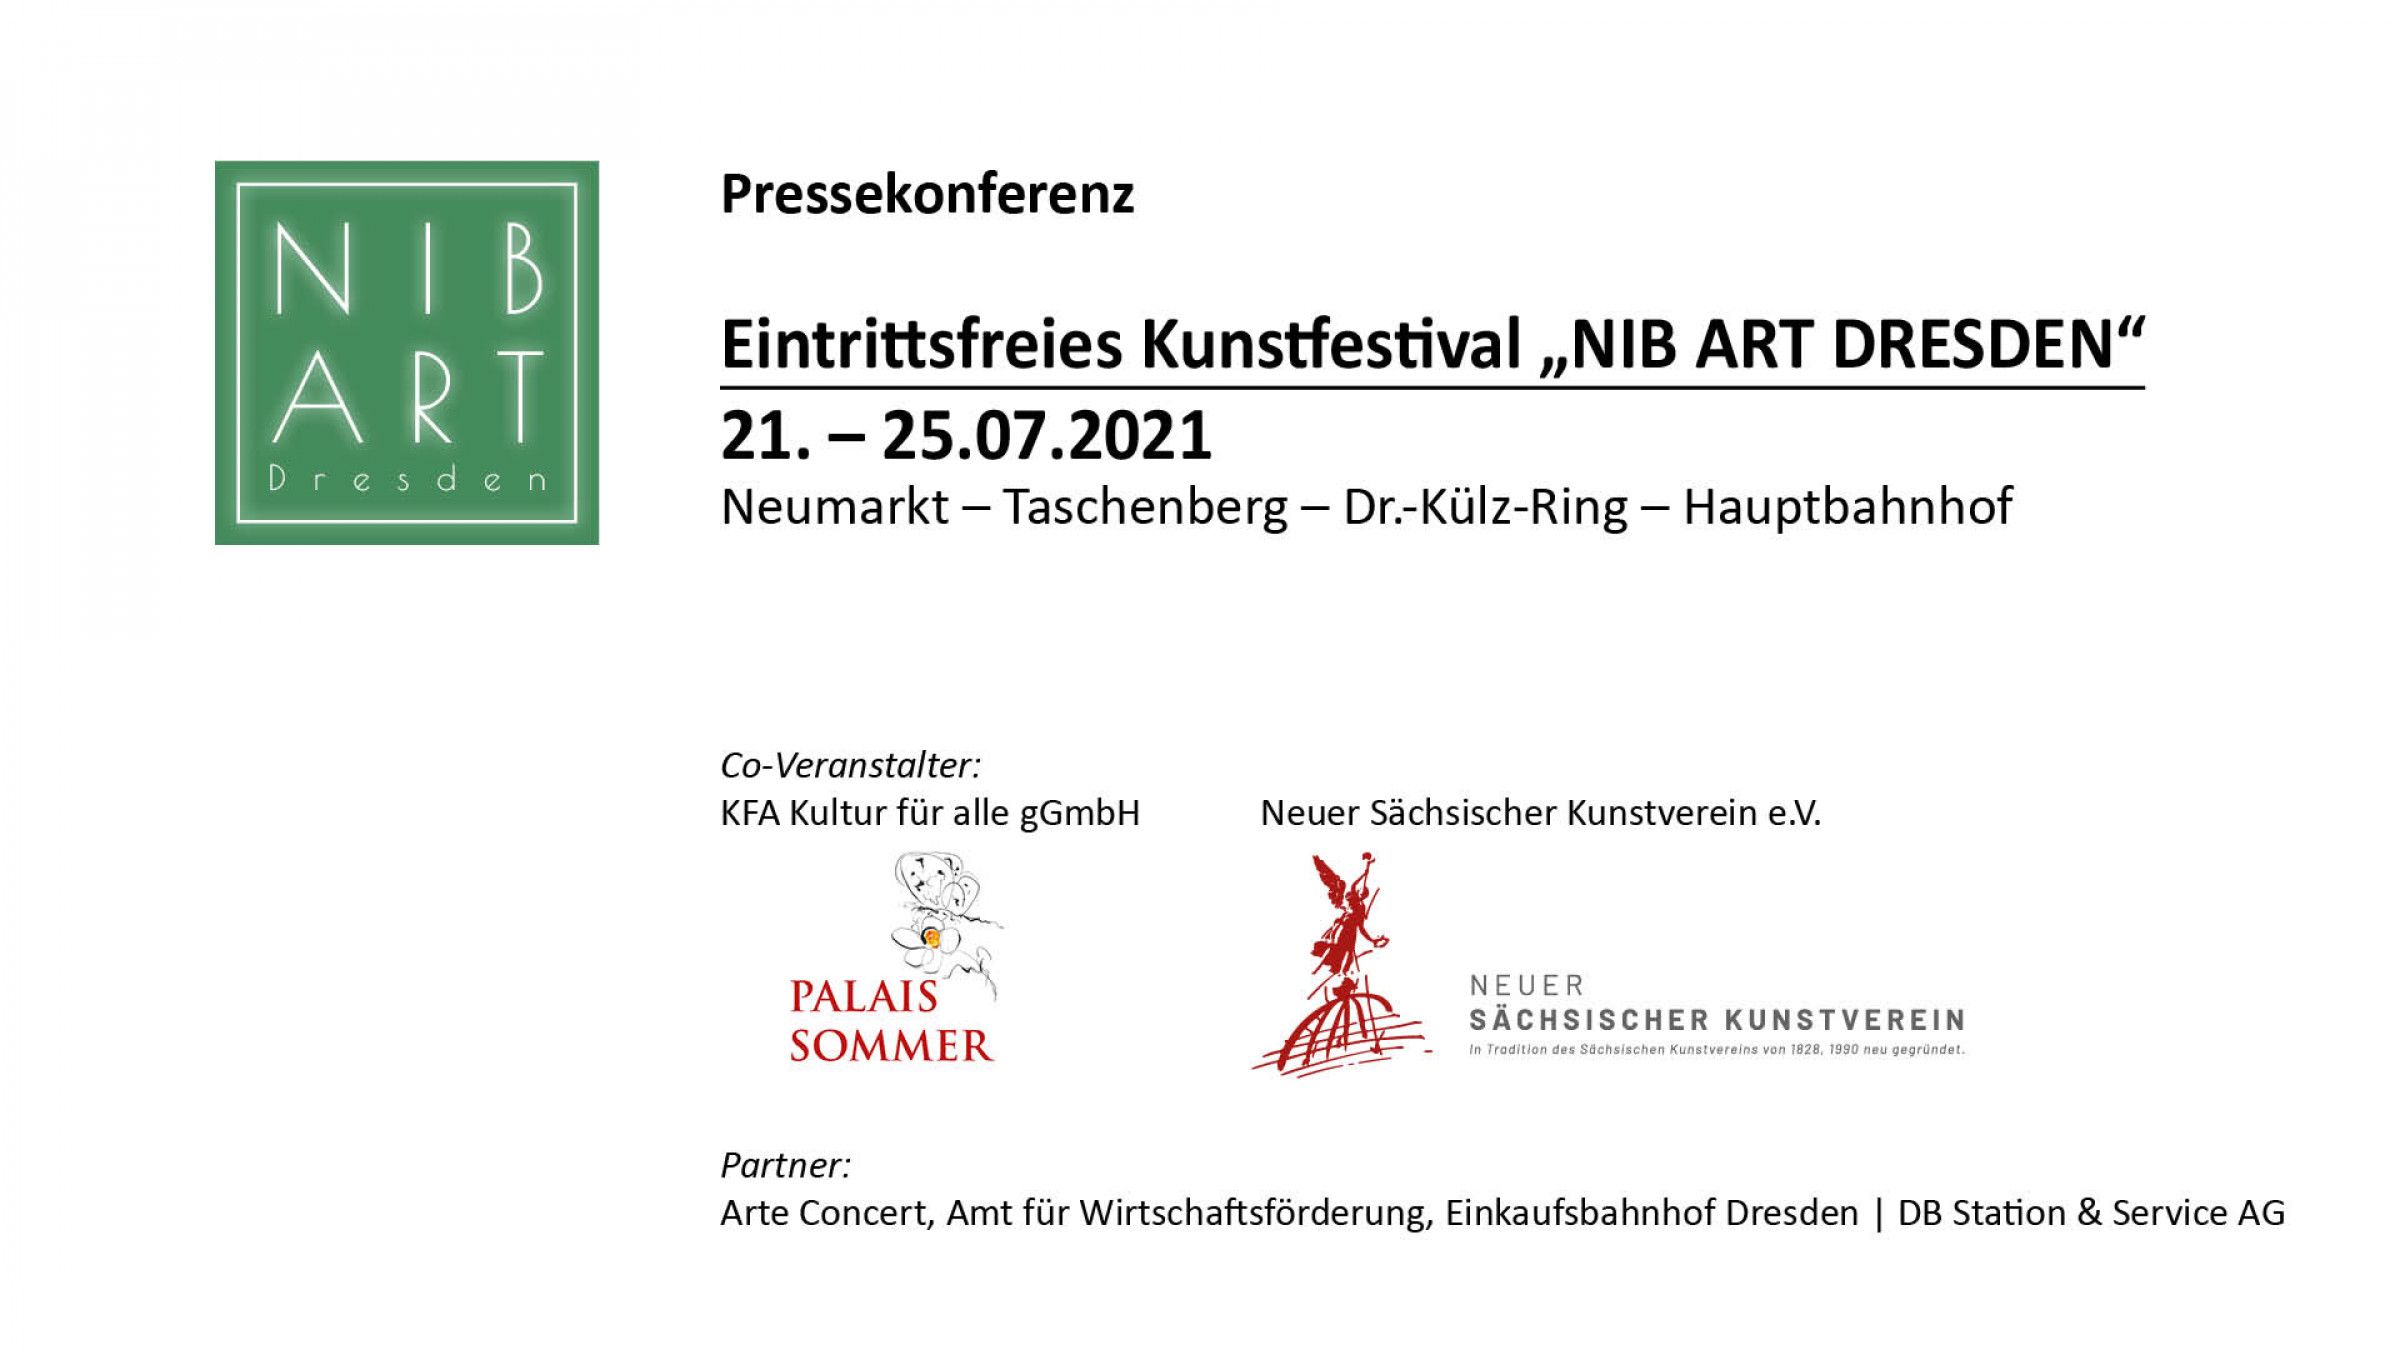 Folie_PK_NIB_ART_2021-06-22-501842fb NIB ART - Dresdens neues eintrittsfreies Kunstfestival (Pressemitteilung)